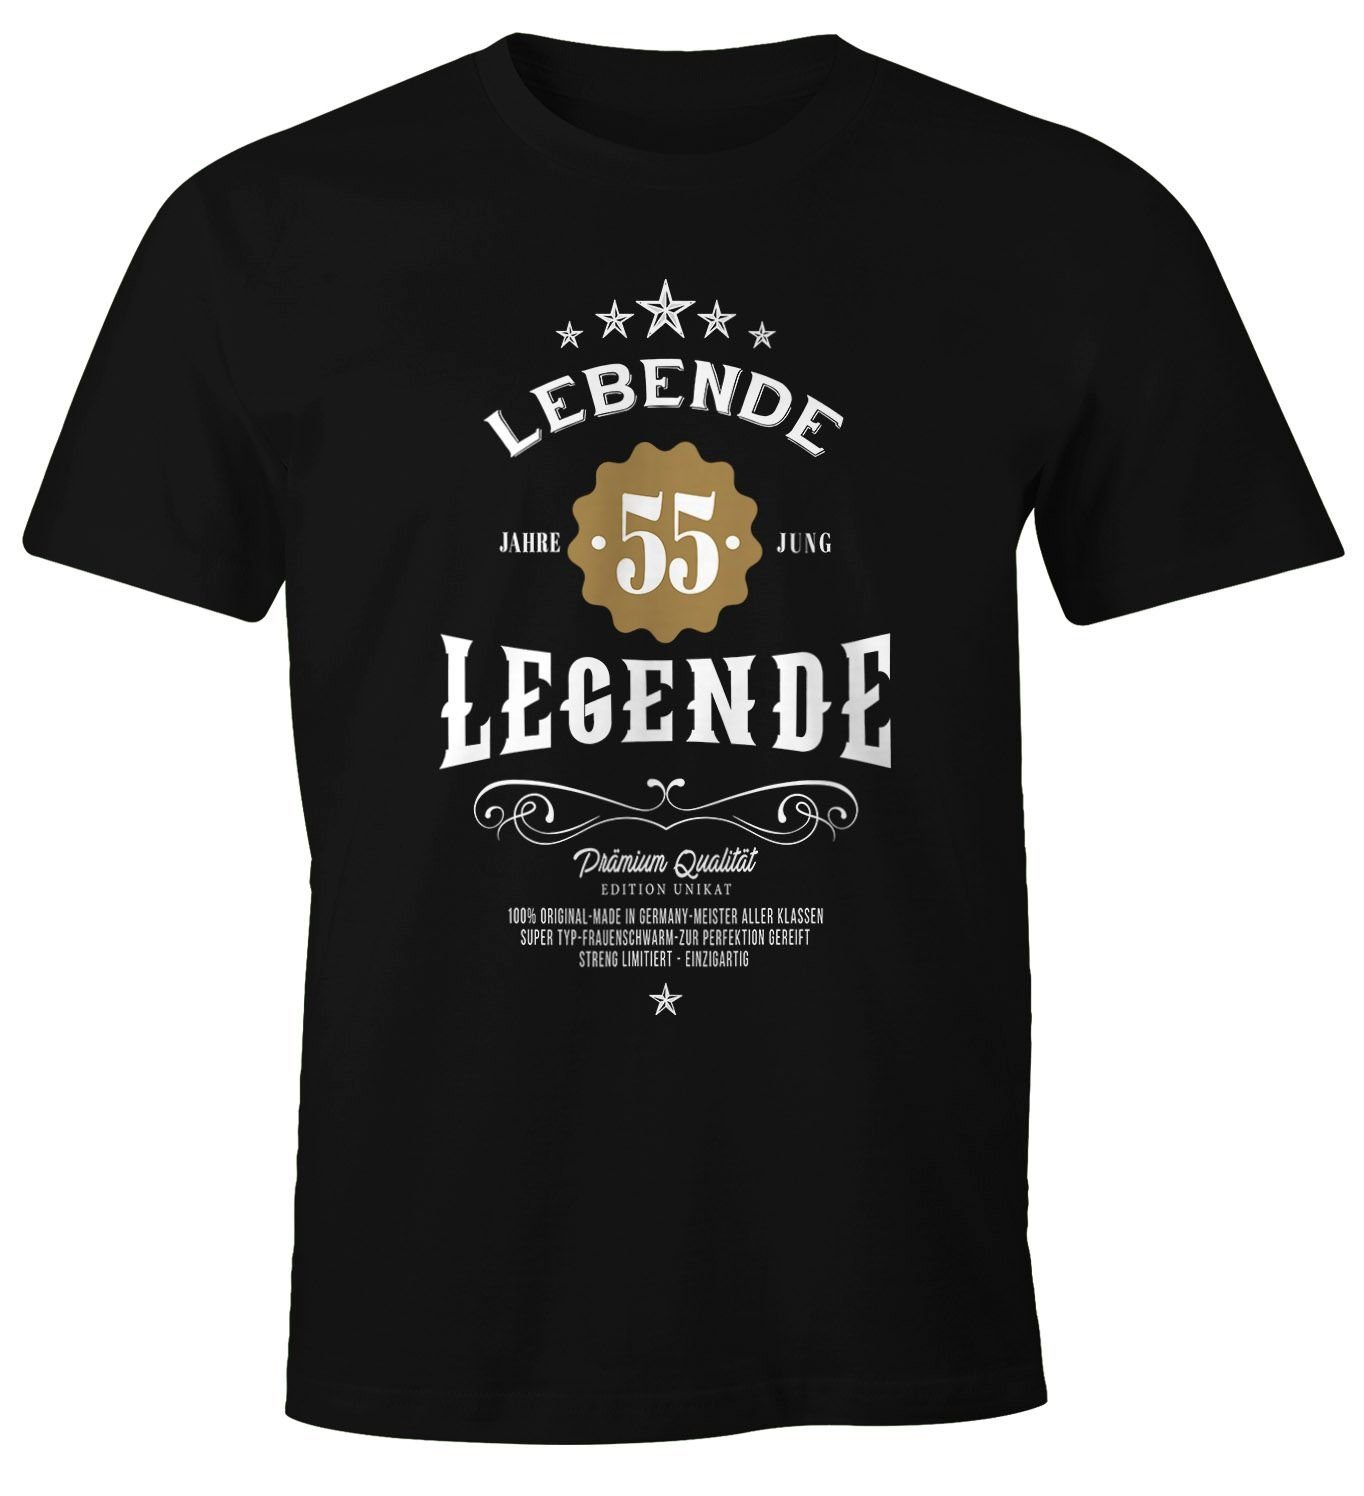 MoonWorks Print-Shirt Herren T-Shirt Geburtstag Geschenk Lebende Legende 30-80 Jahre jung Moonworks® mit Print 55 schwarz